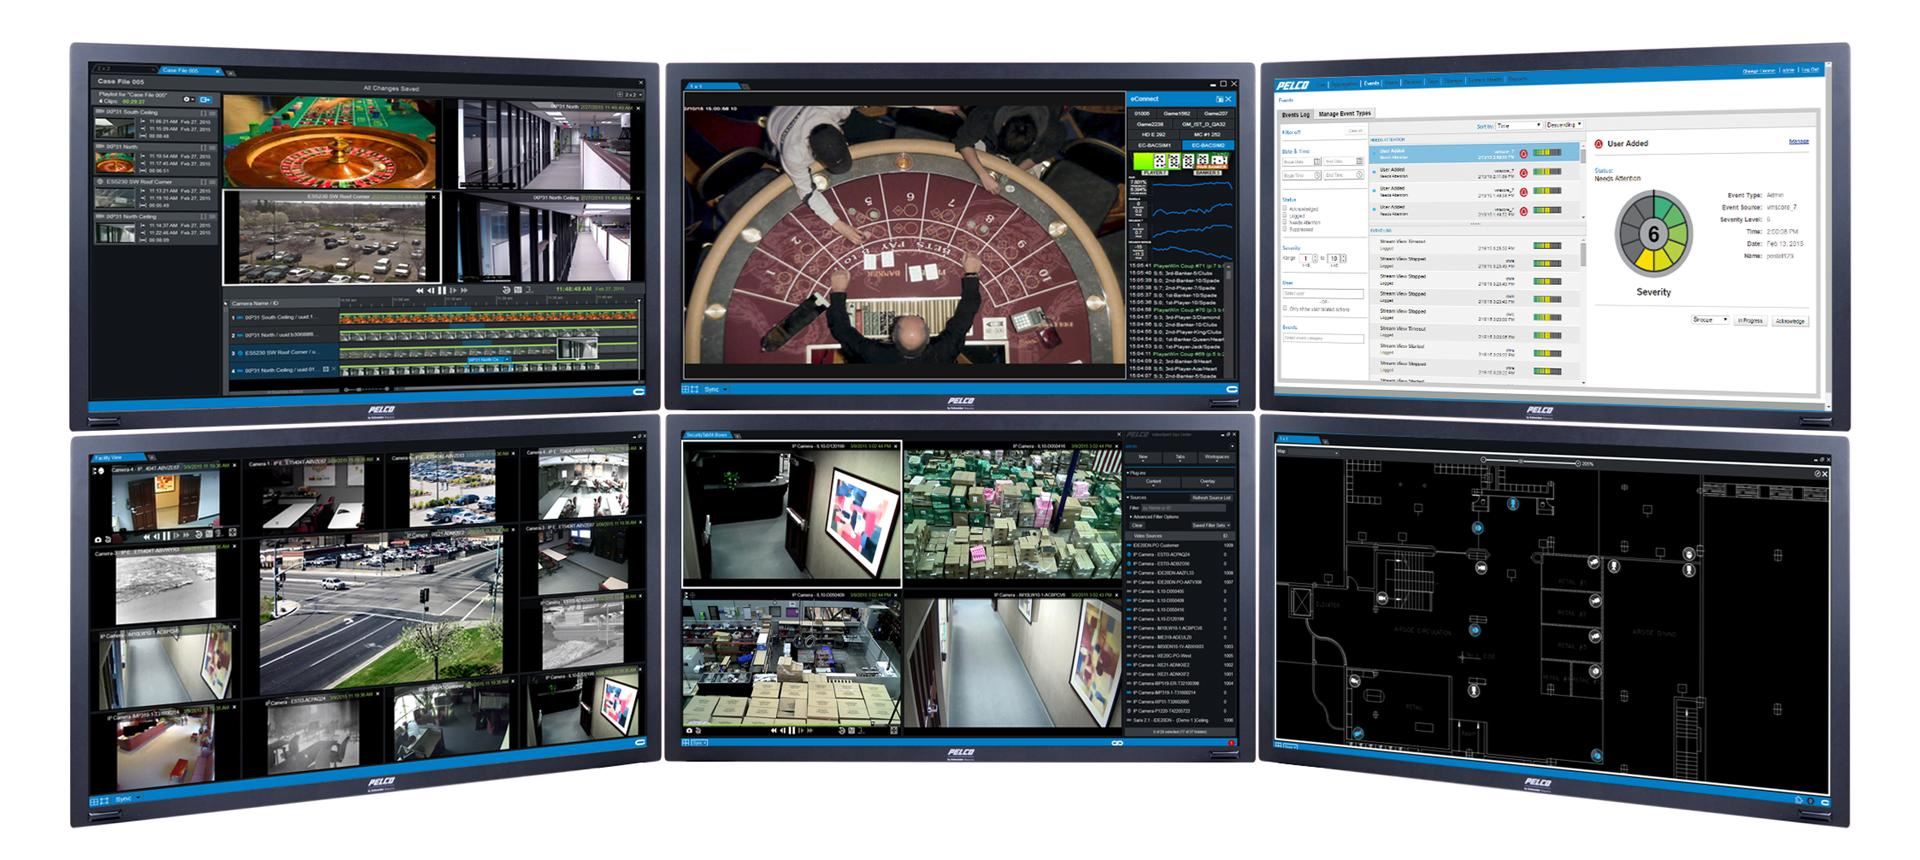 PELCO VideoXpert video management system